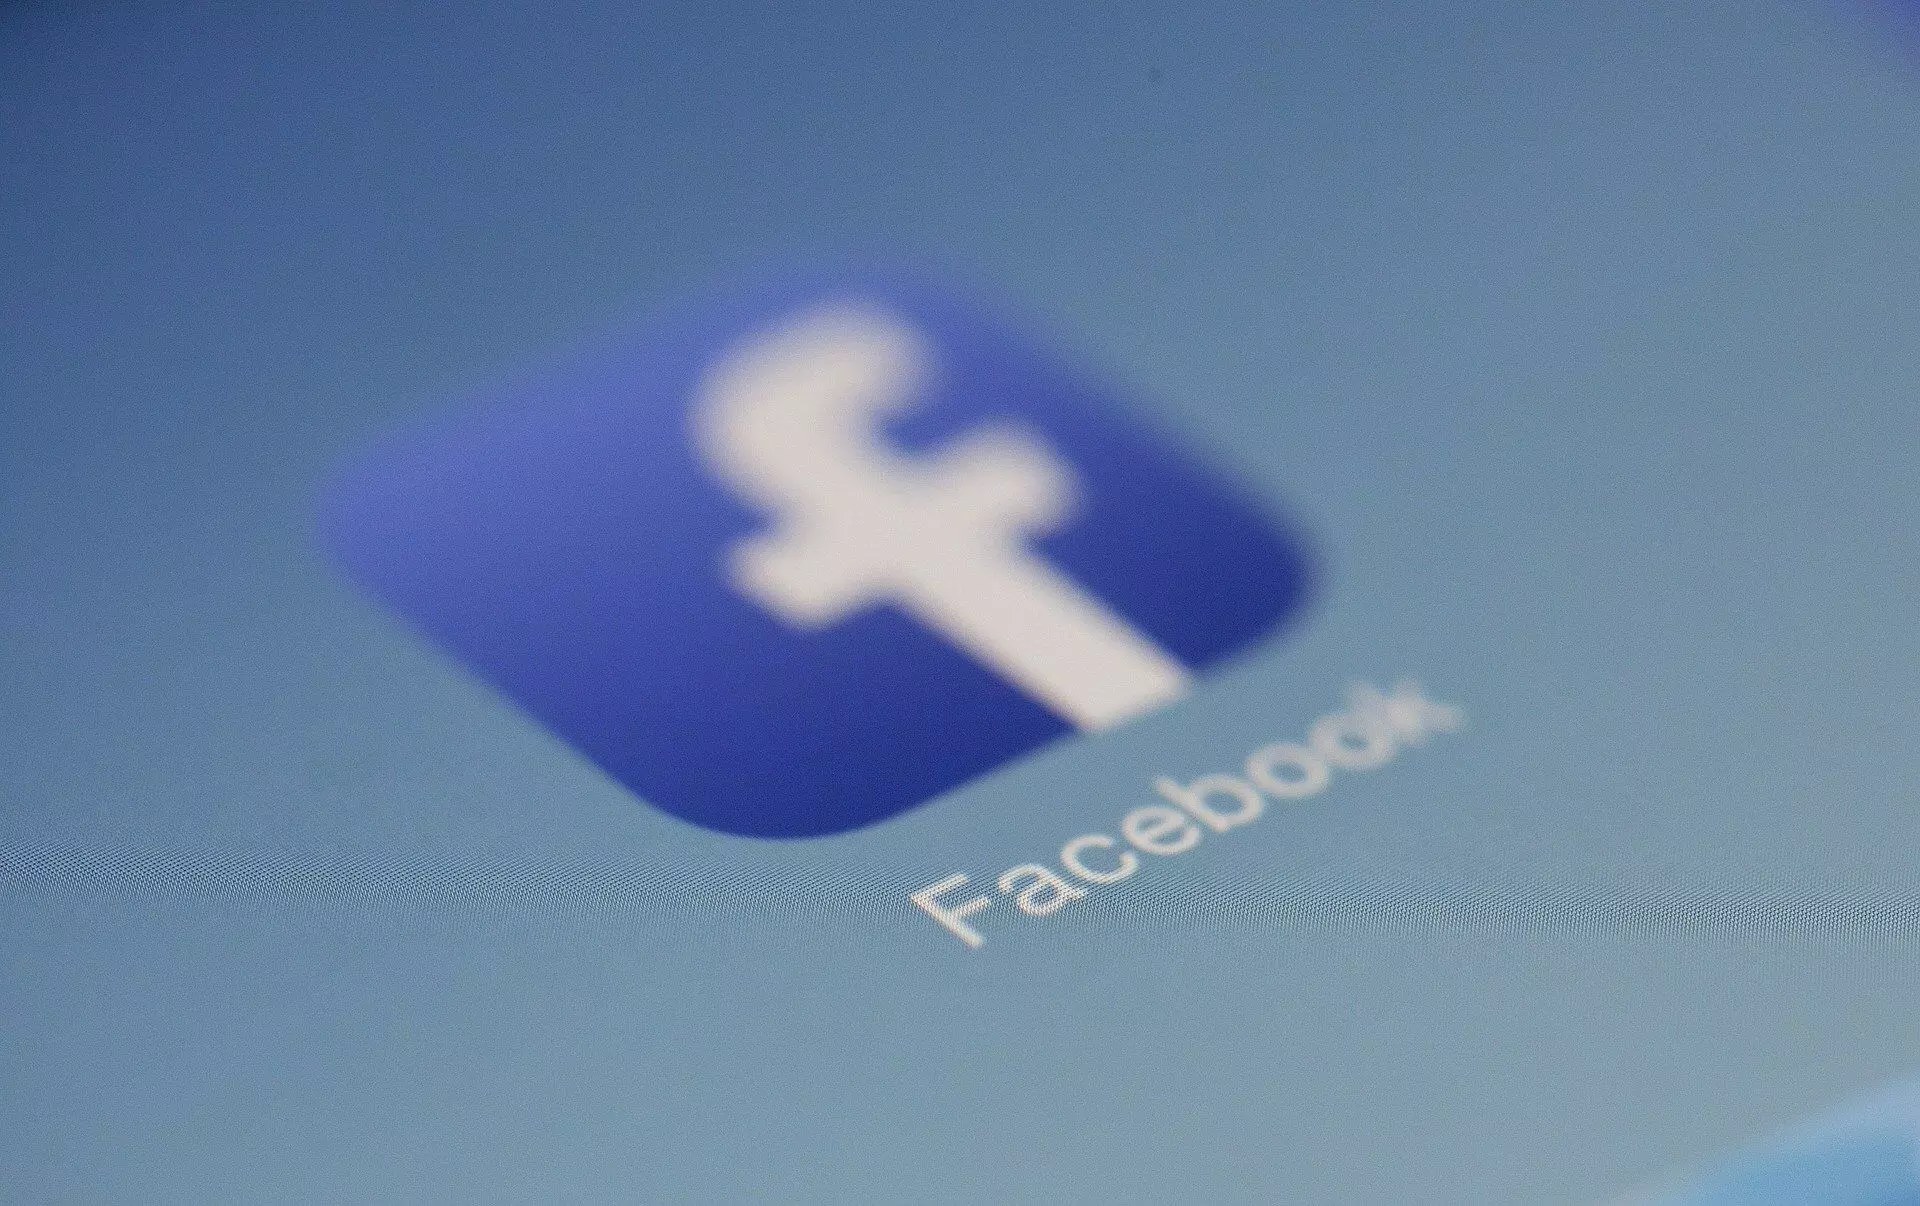 EU, UK start investigation on Facebook over violating competition rules